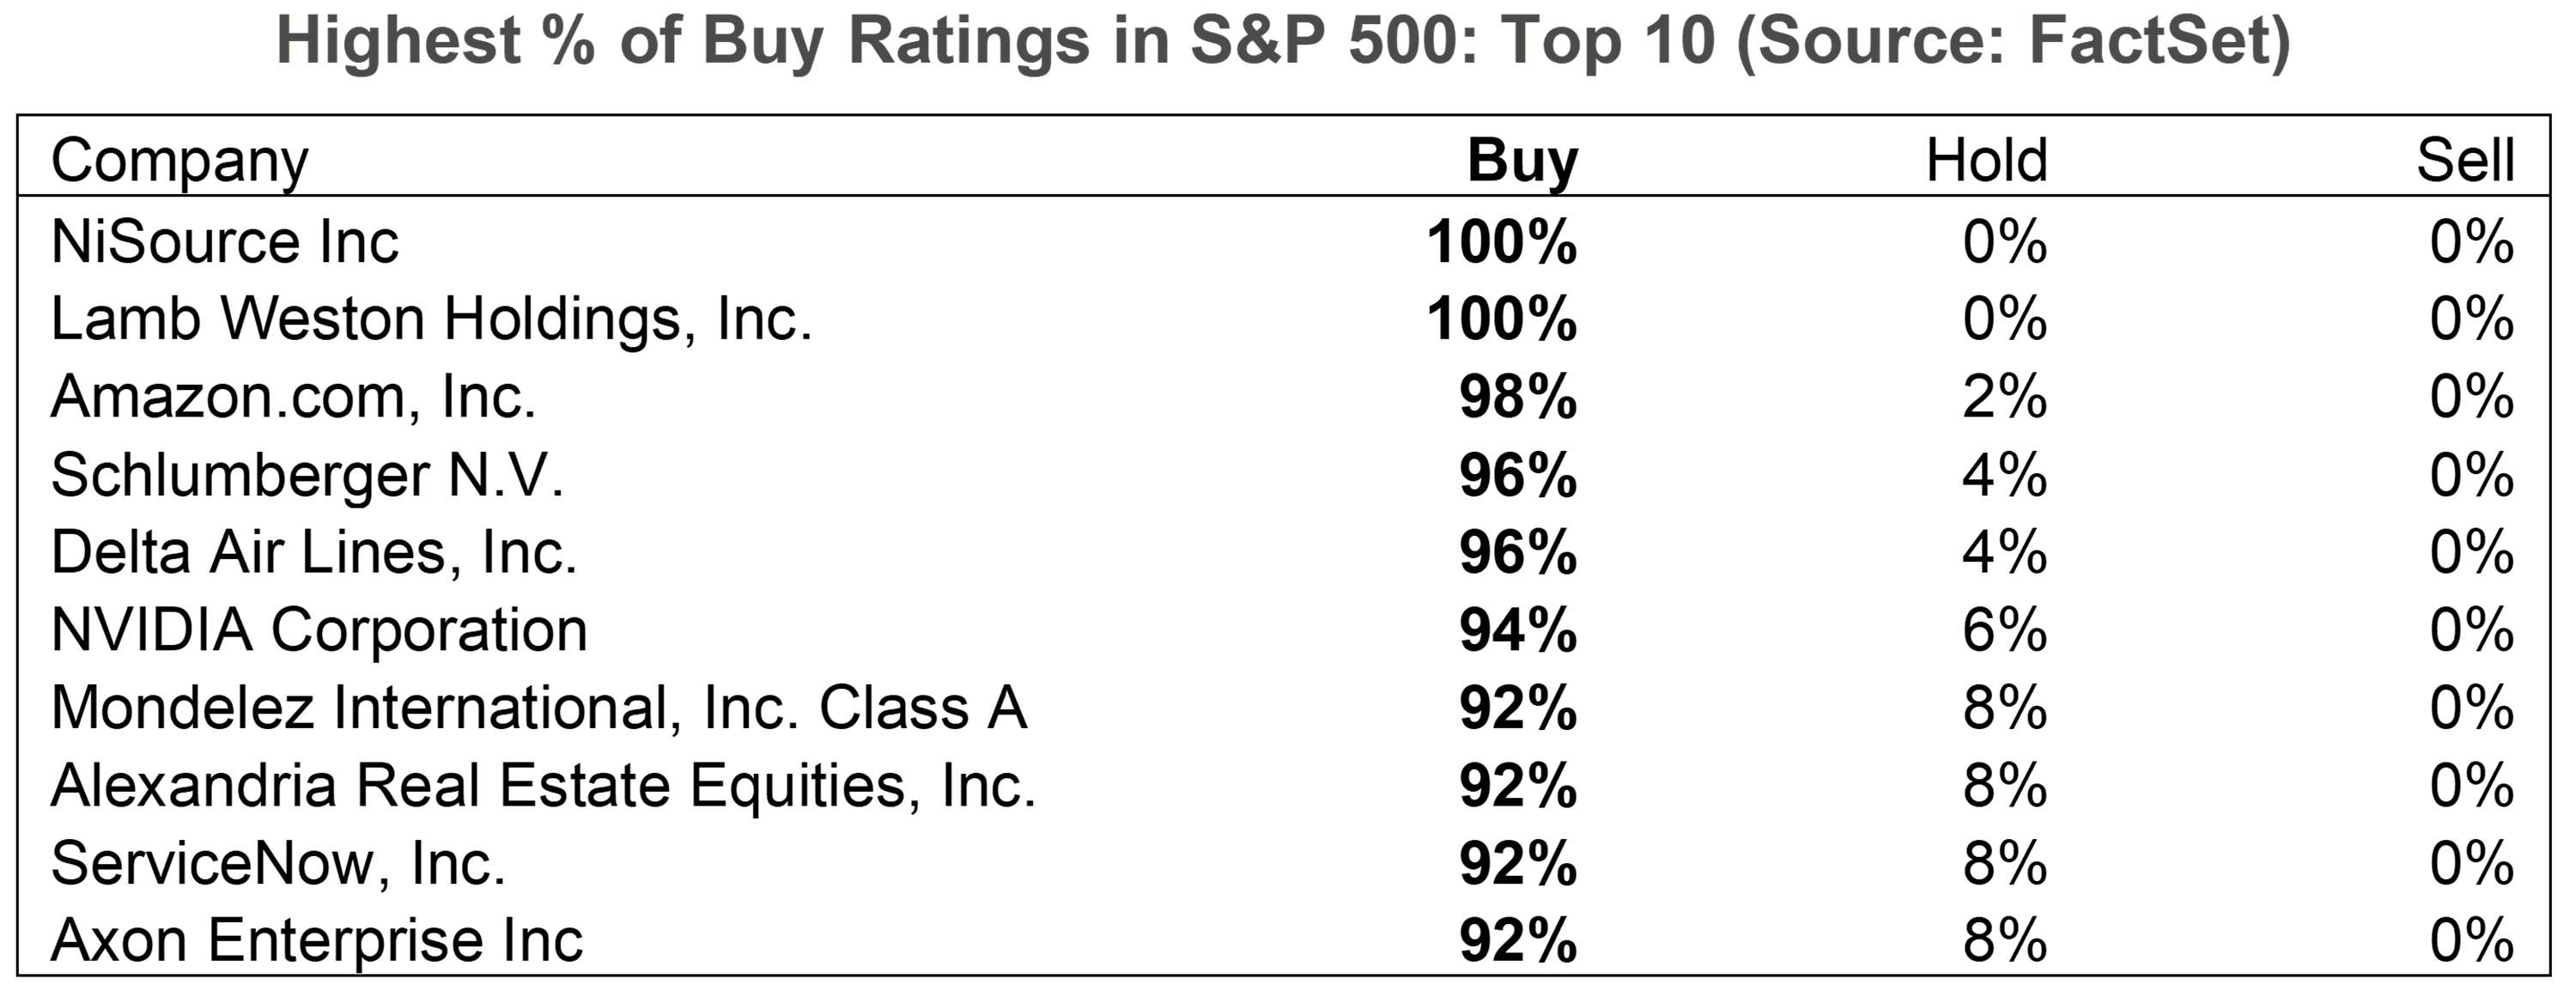 002-highest-percent-of-buy-ratings-in-s&p-500-top-10